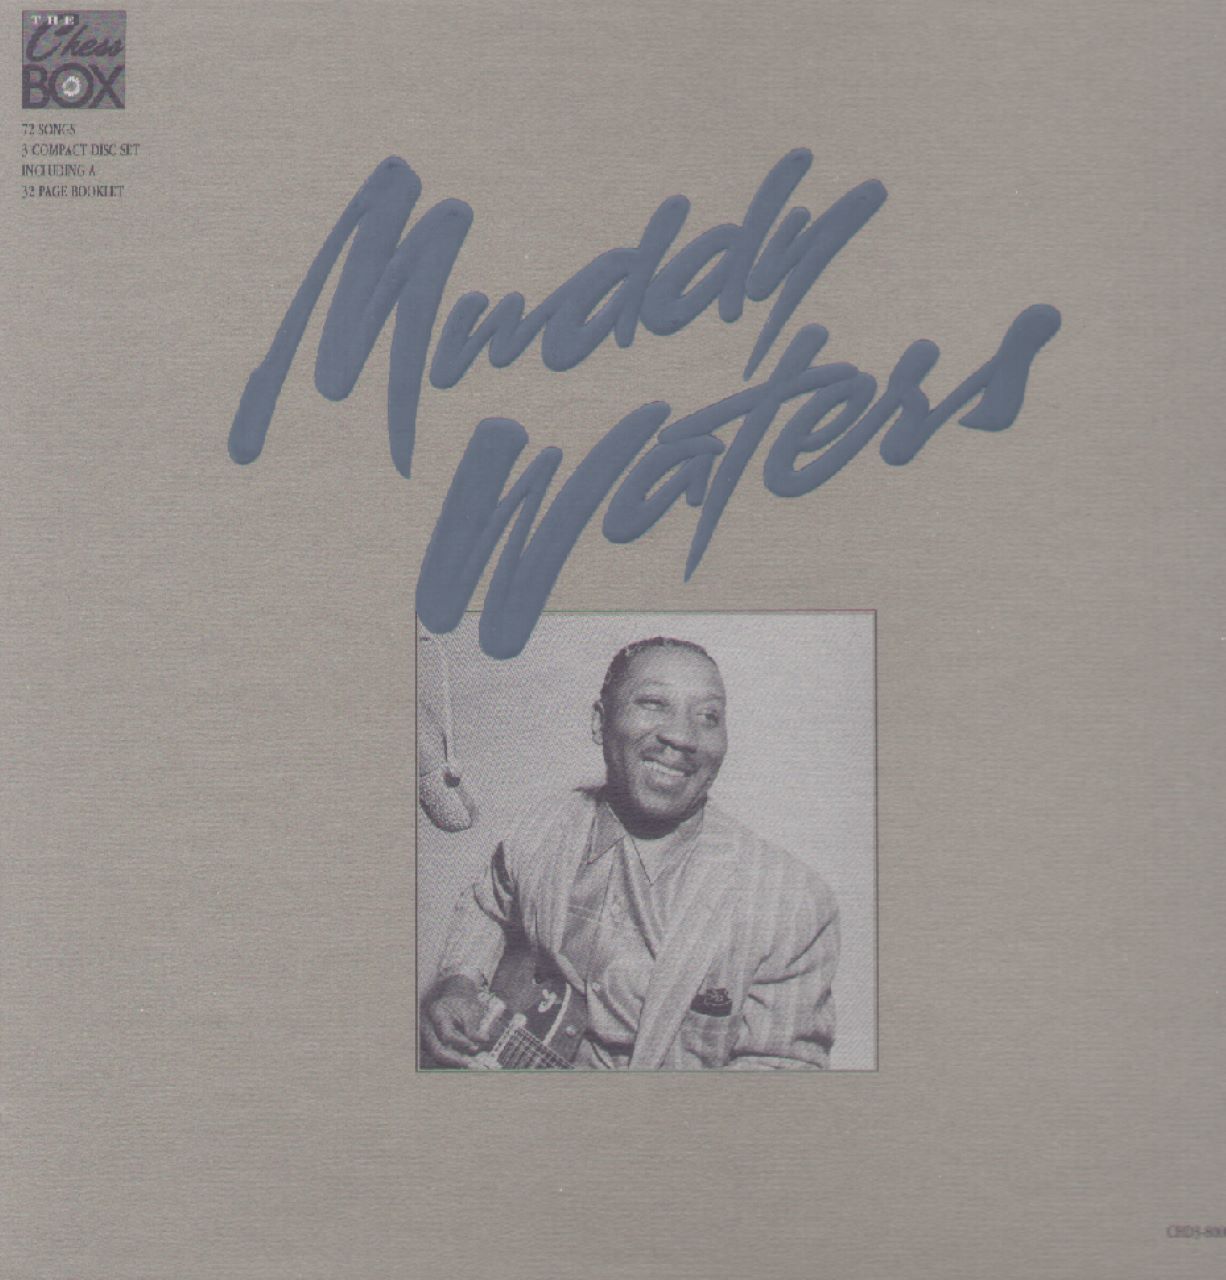 Muddy Waters – “Muddy Waters” cover album